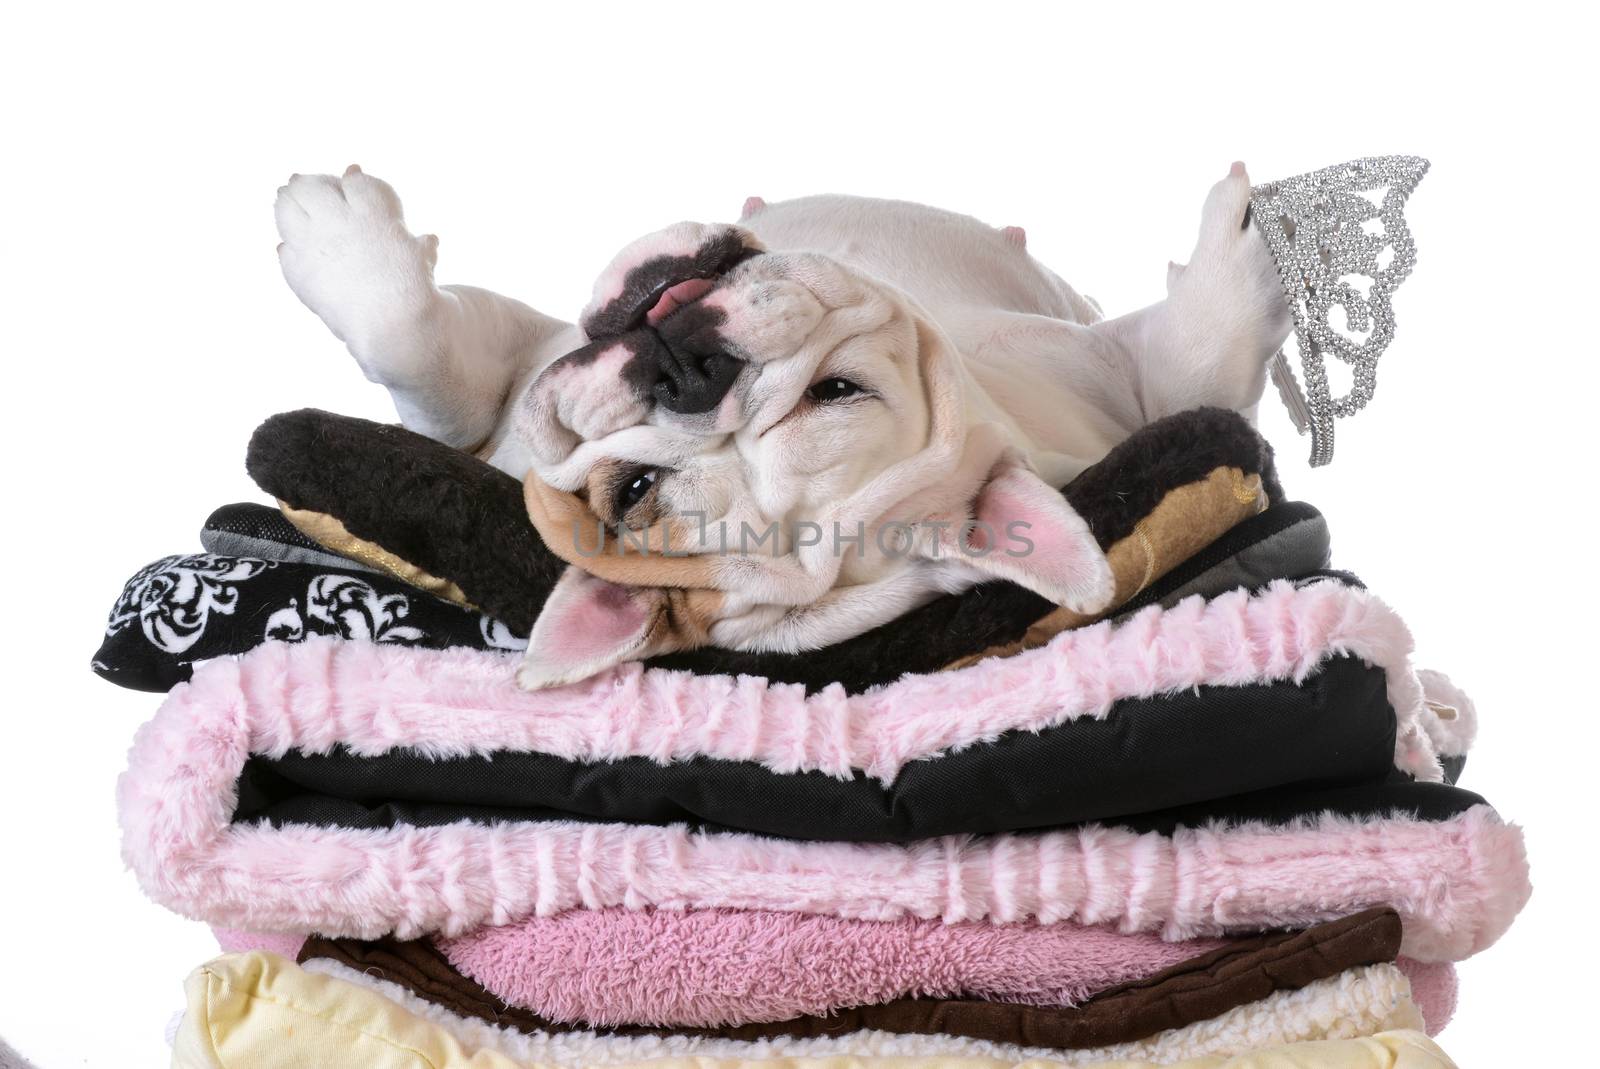 spoiled dog laying on a pile of soft dog beds isolated on white background - english bulldog